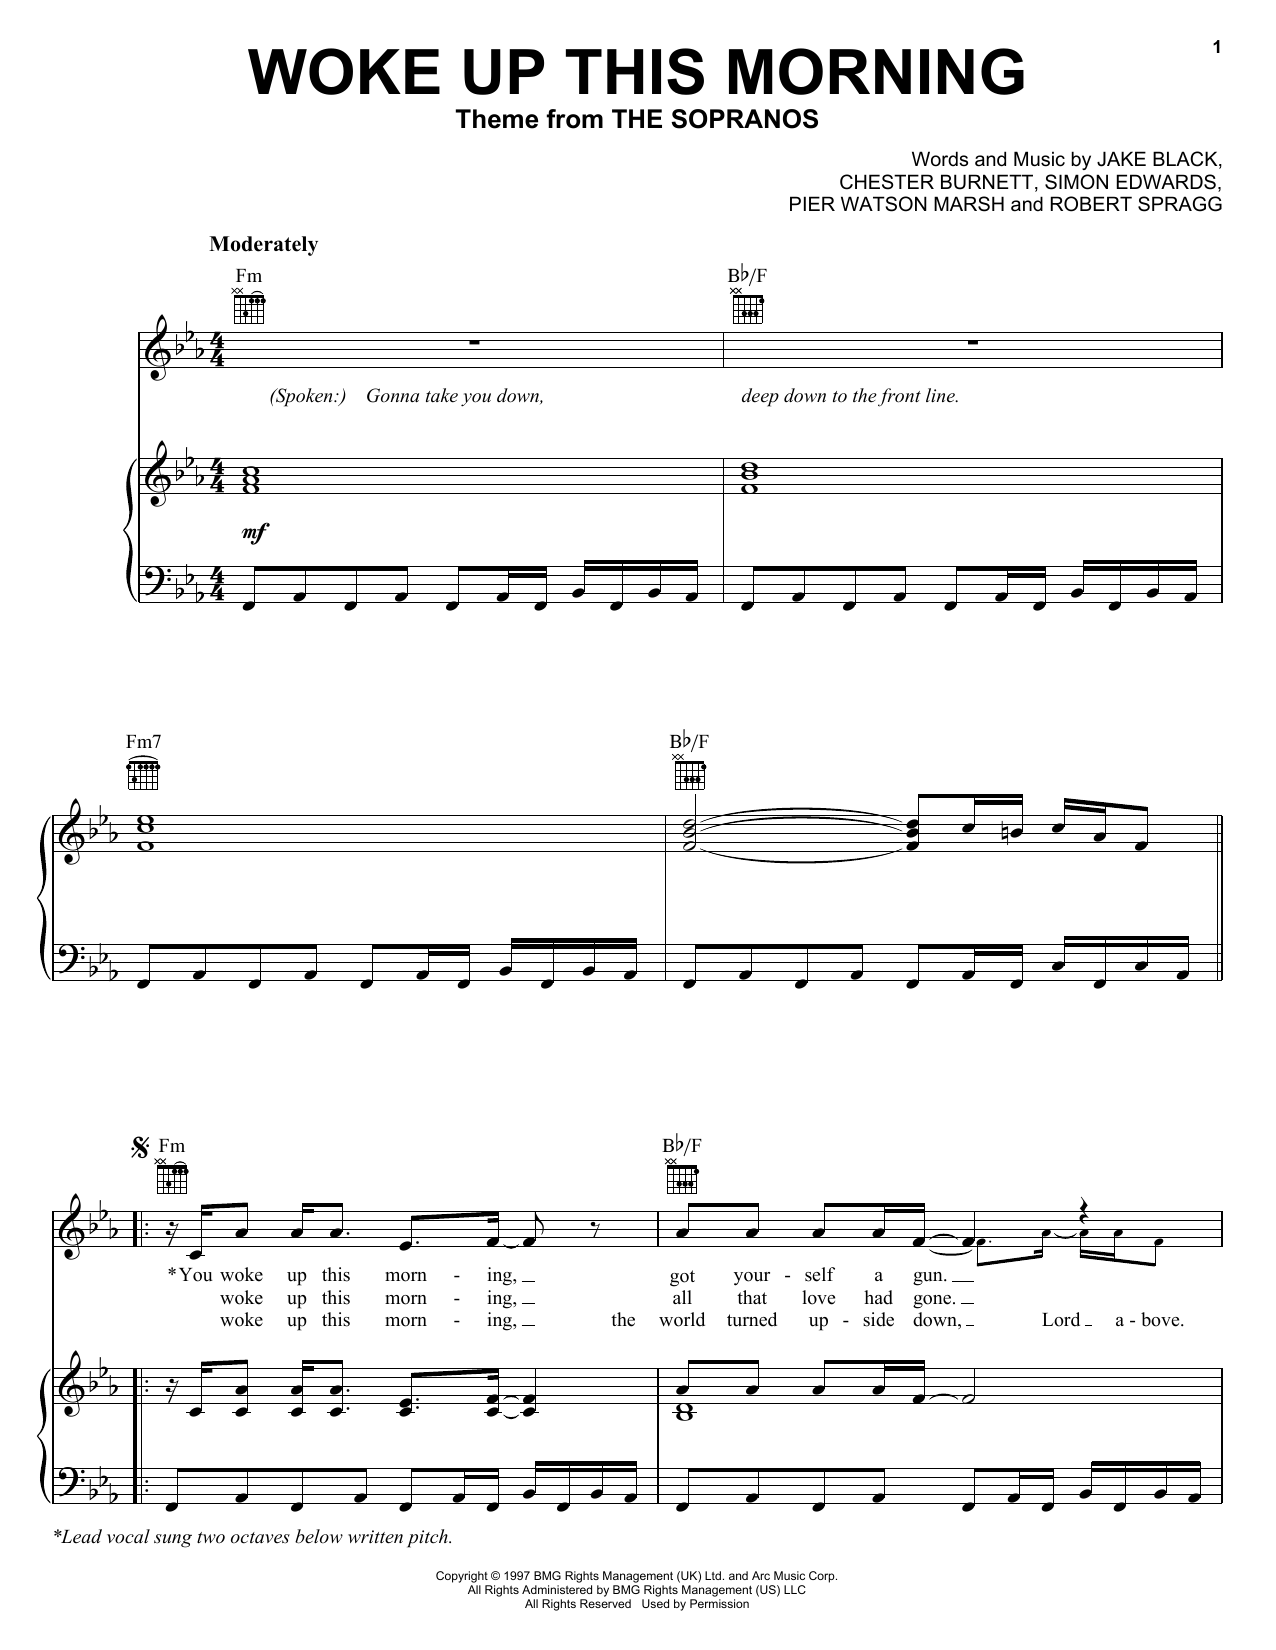 Alabama 3 Woke Up This Morning (Theme from The Sopranos) Sheet Music Notes & Chords for Guitar Chords/Lyrics - Download or Print PDF